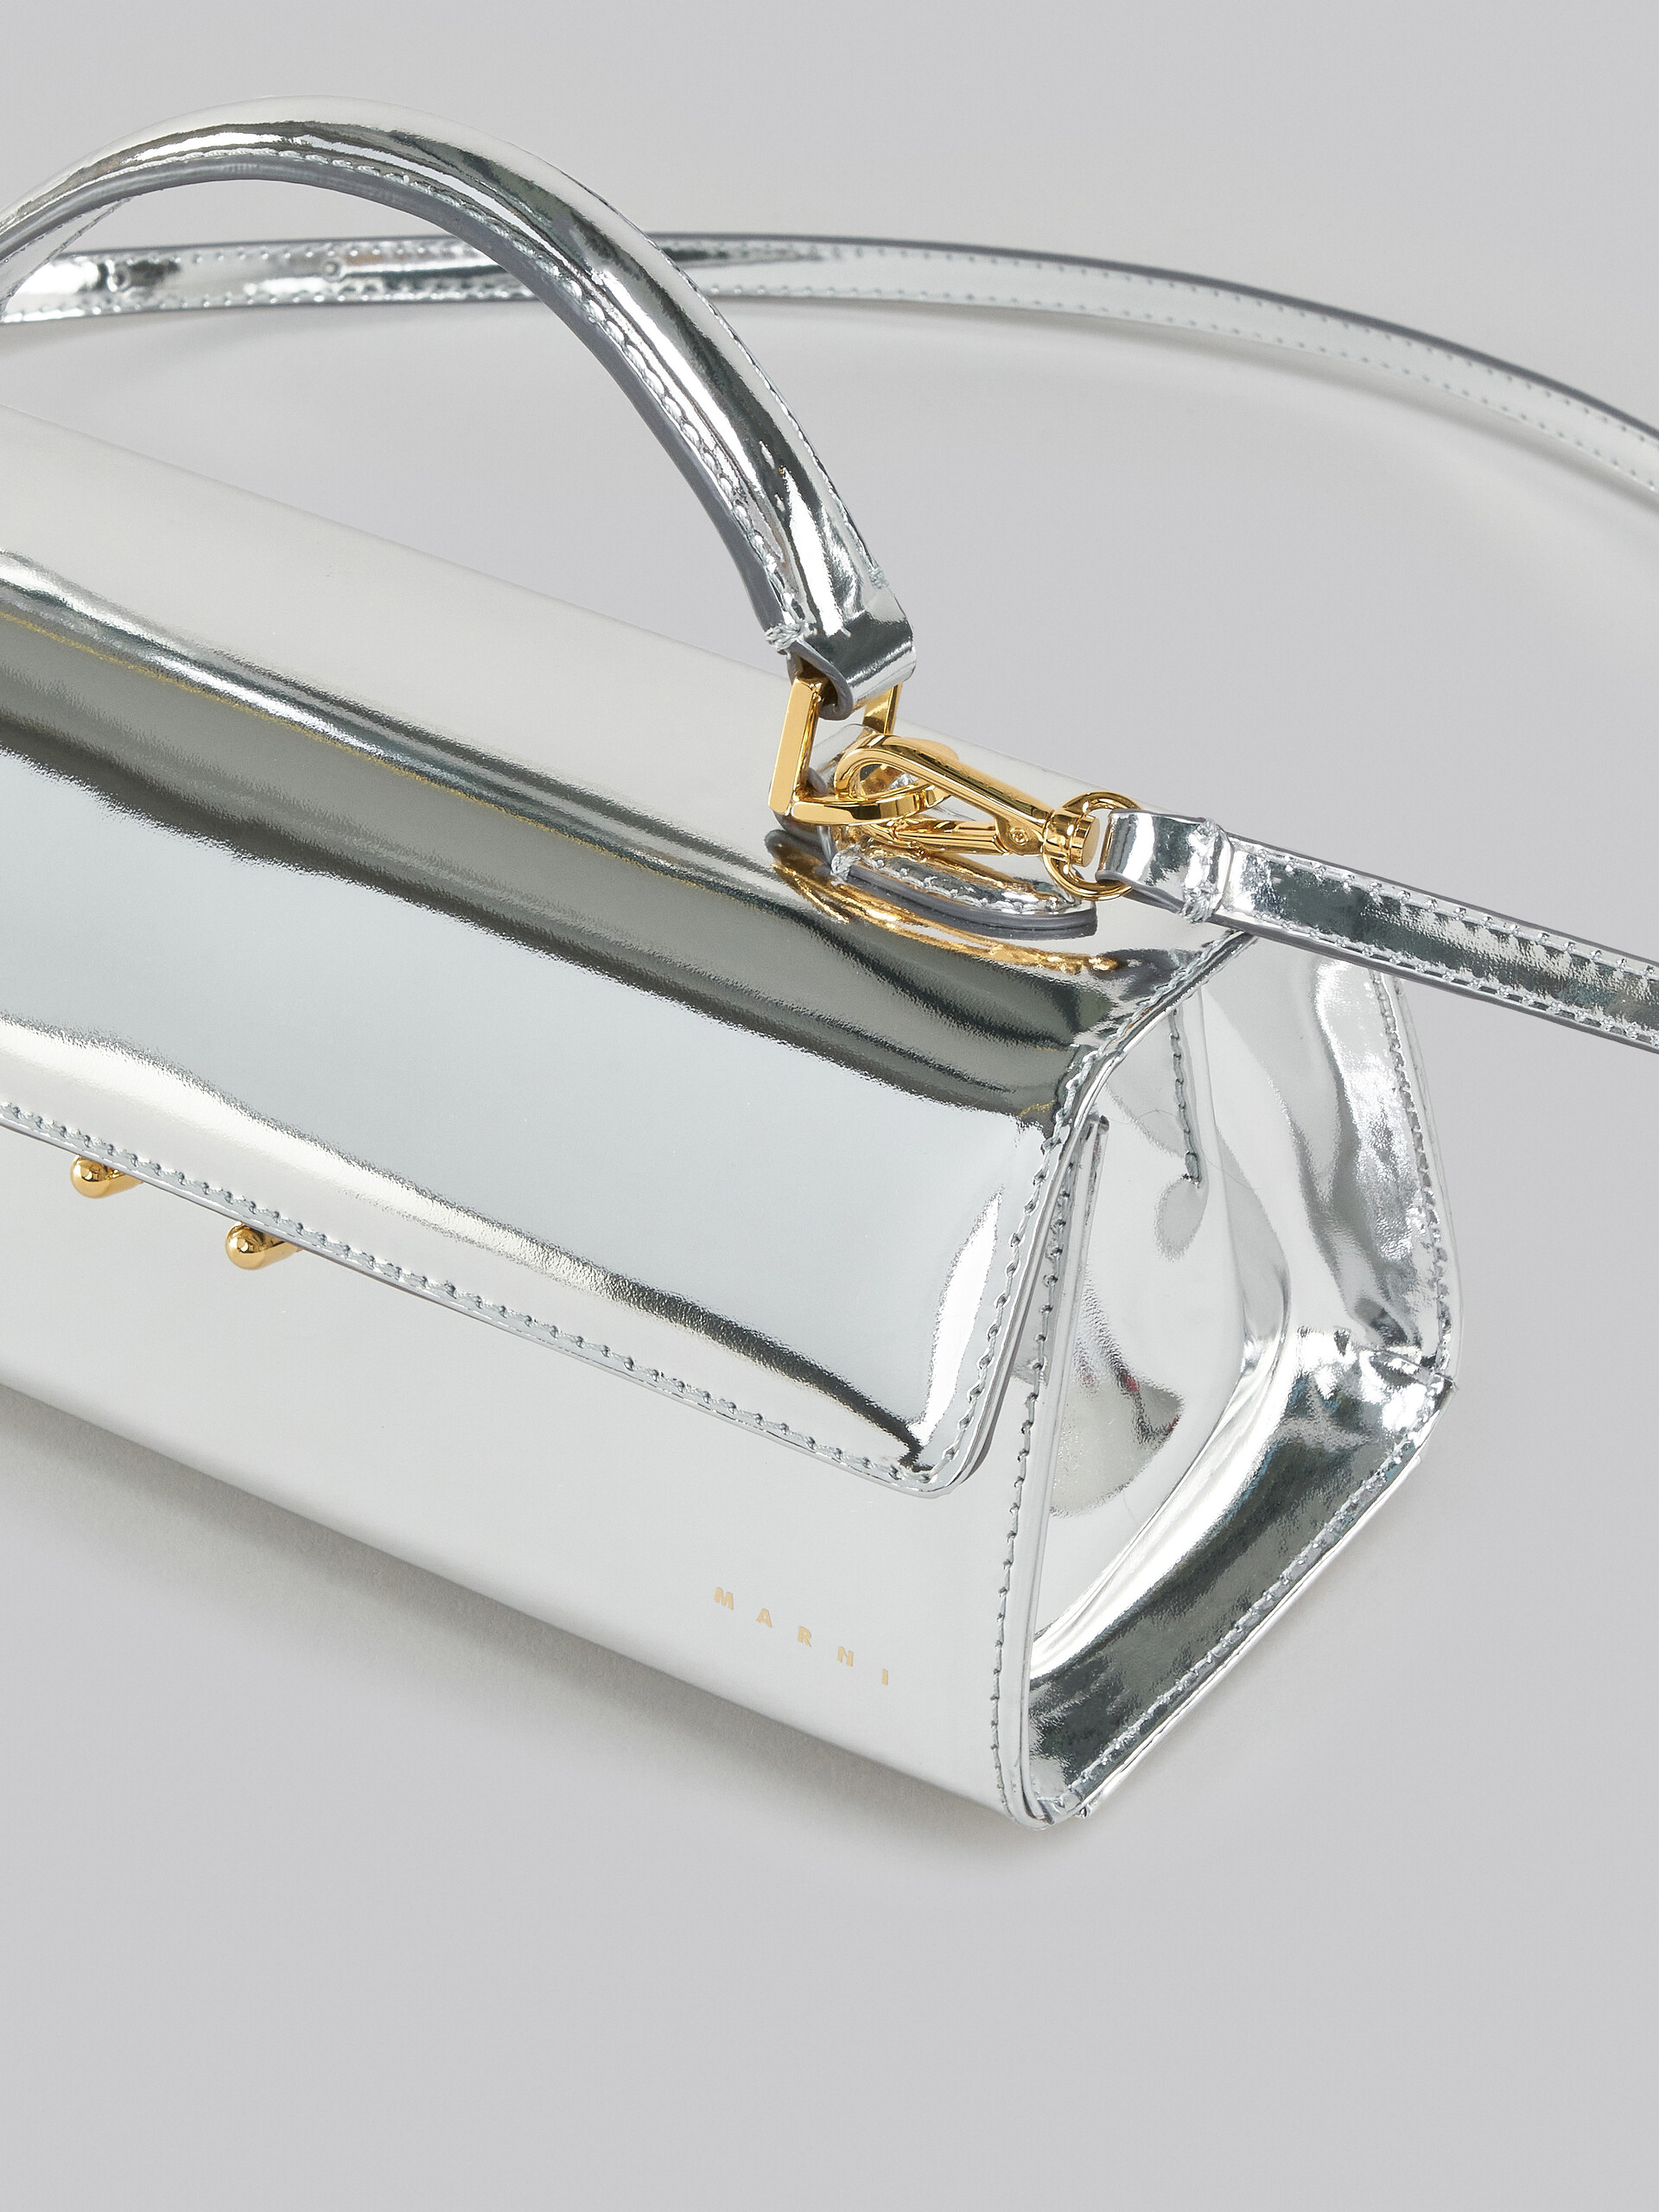 Relativity Medium Bag in silver mirrored leather - Handbags - Image 4